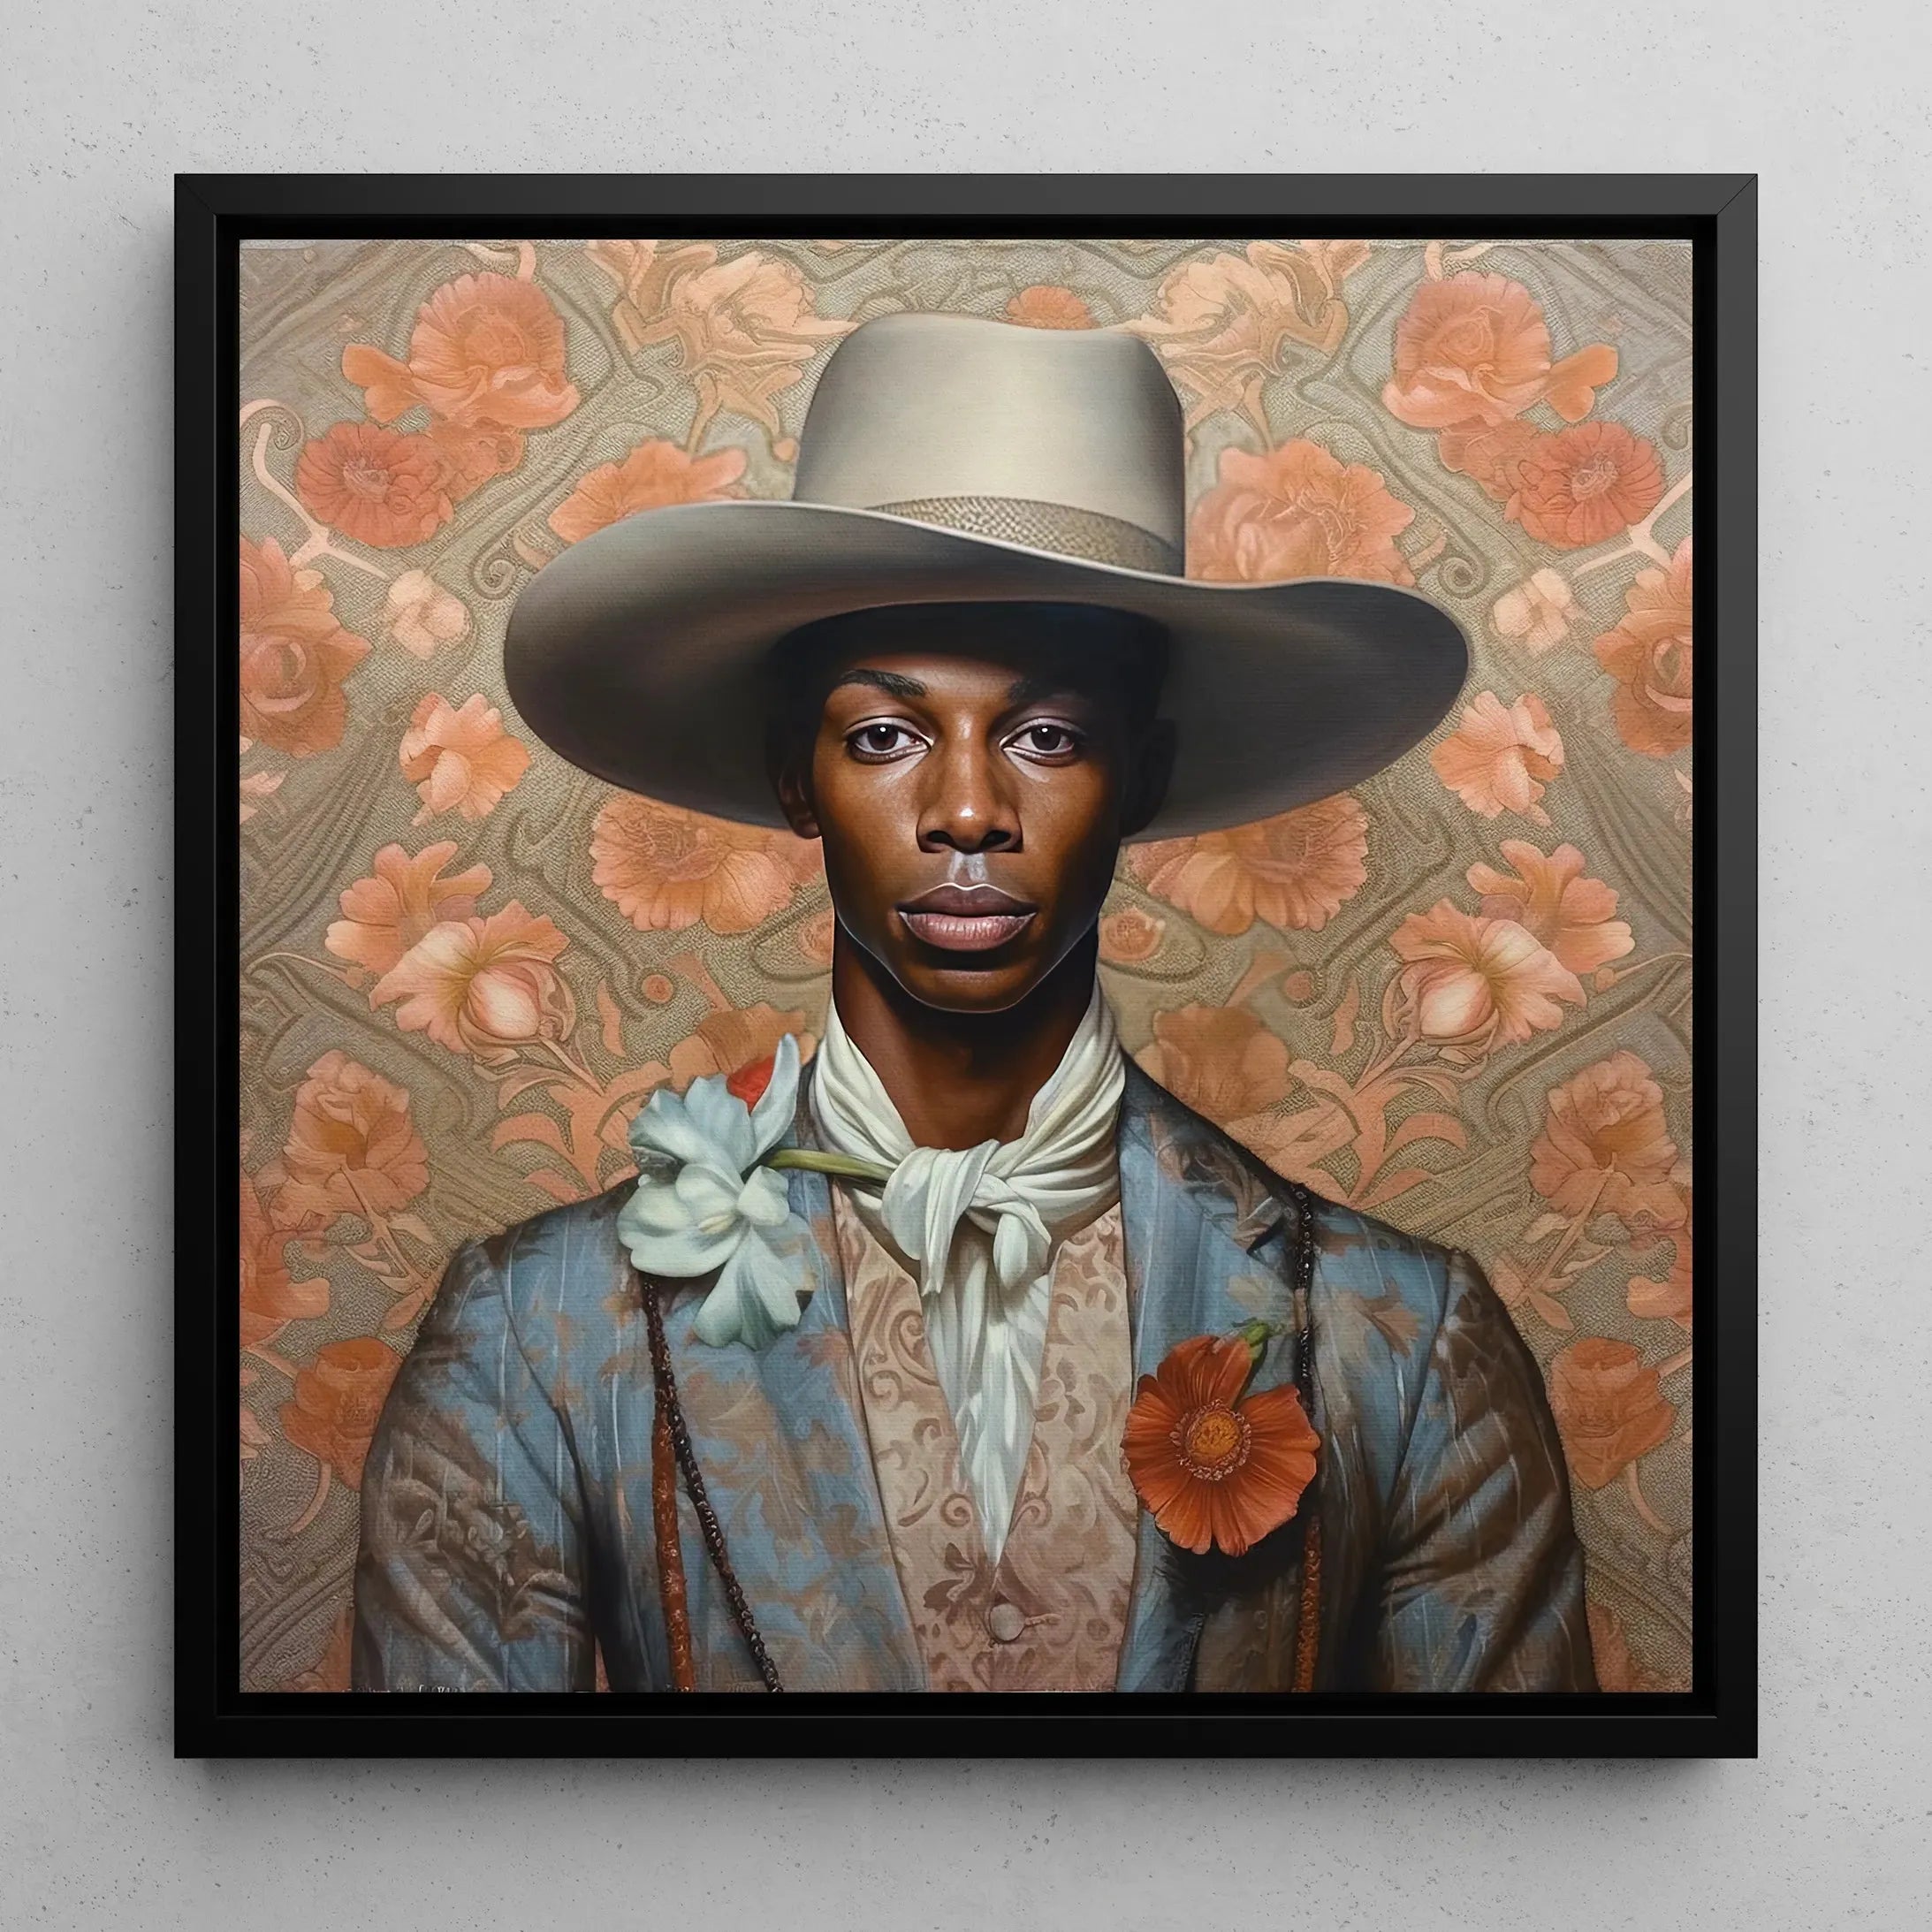 Apollo - Gay Black Cowboy Framed Canvas - Afroamerican Dandy - 16’x16’ - Posters Prints & Visual Artwork - Aesthetic Art